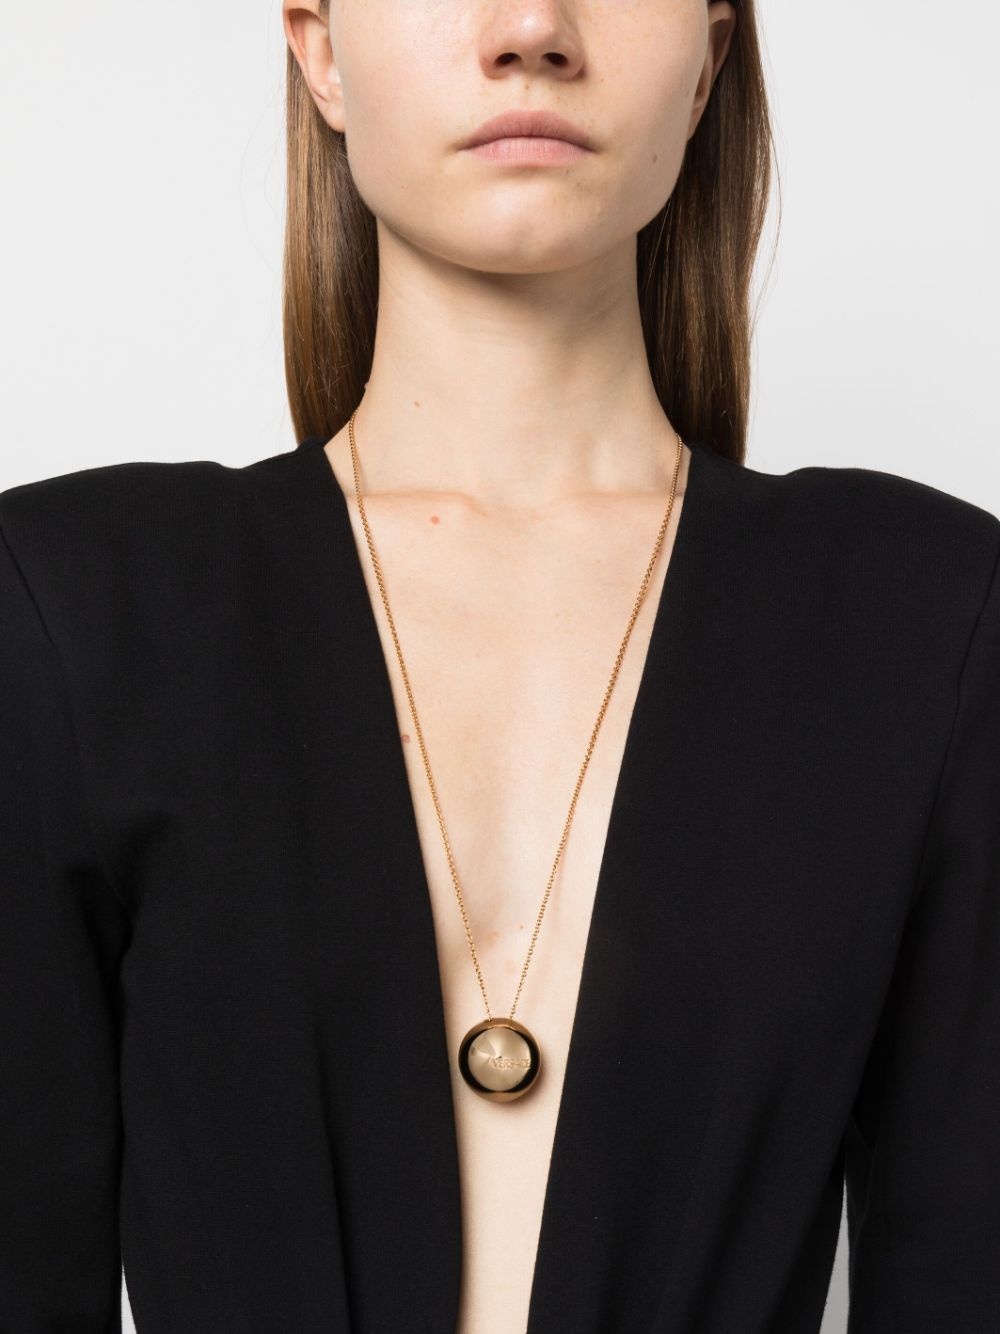 sphere-pendant necklace - 2